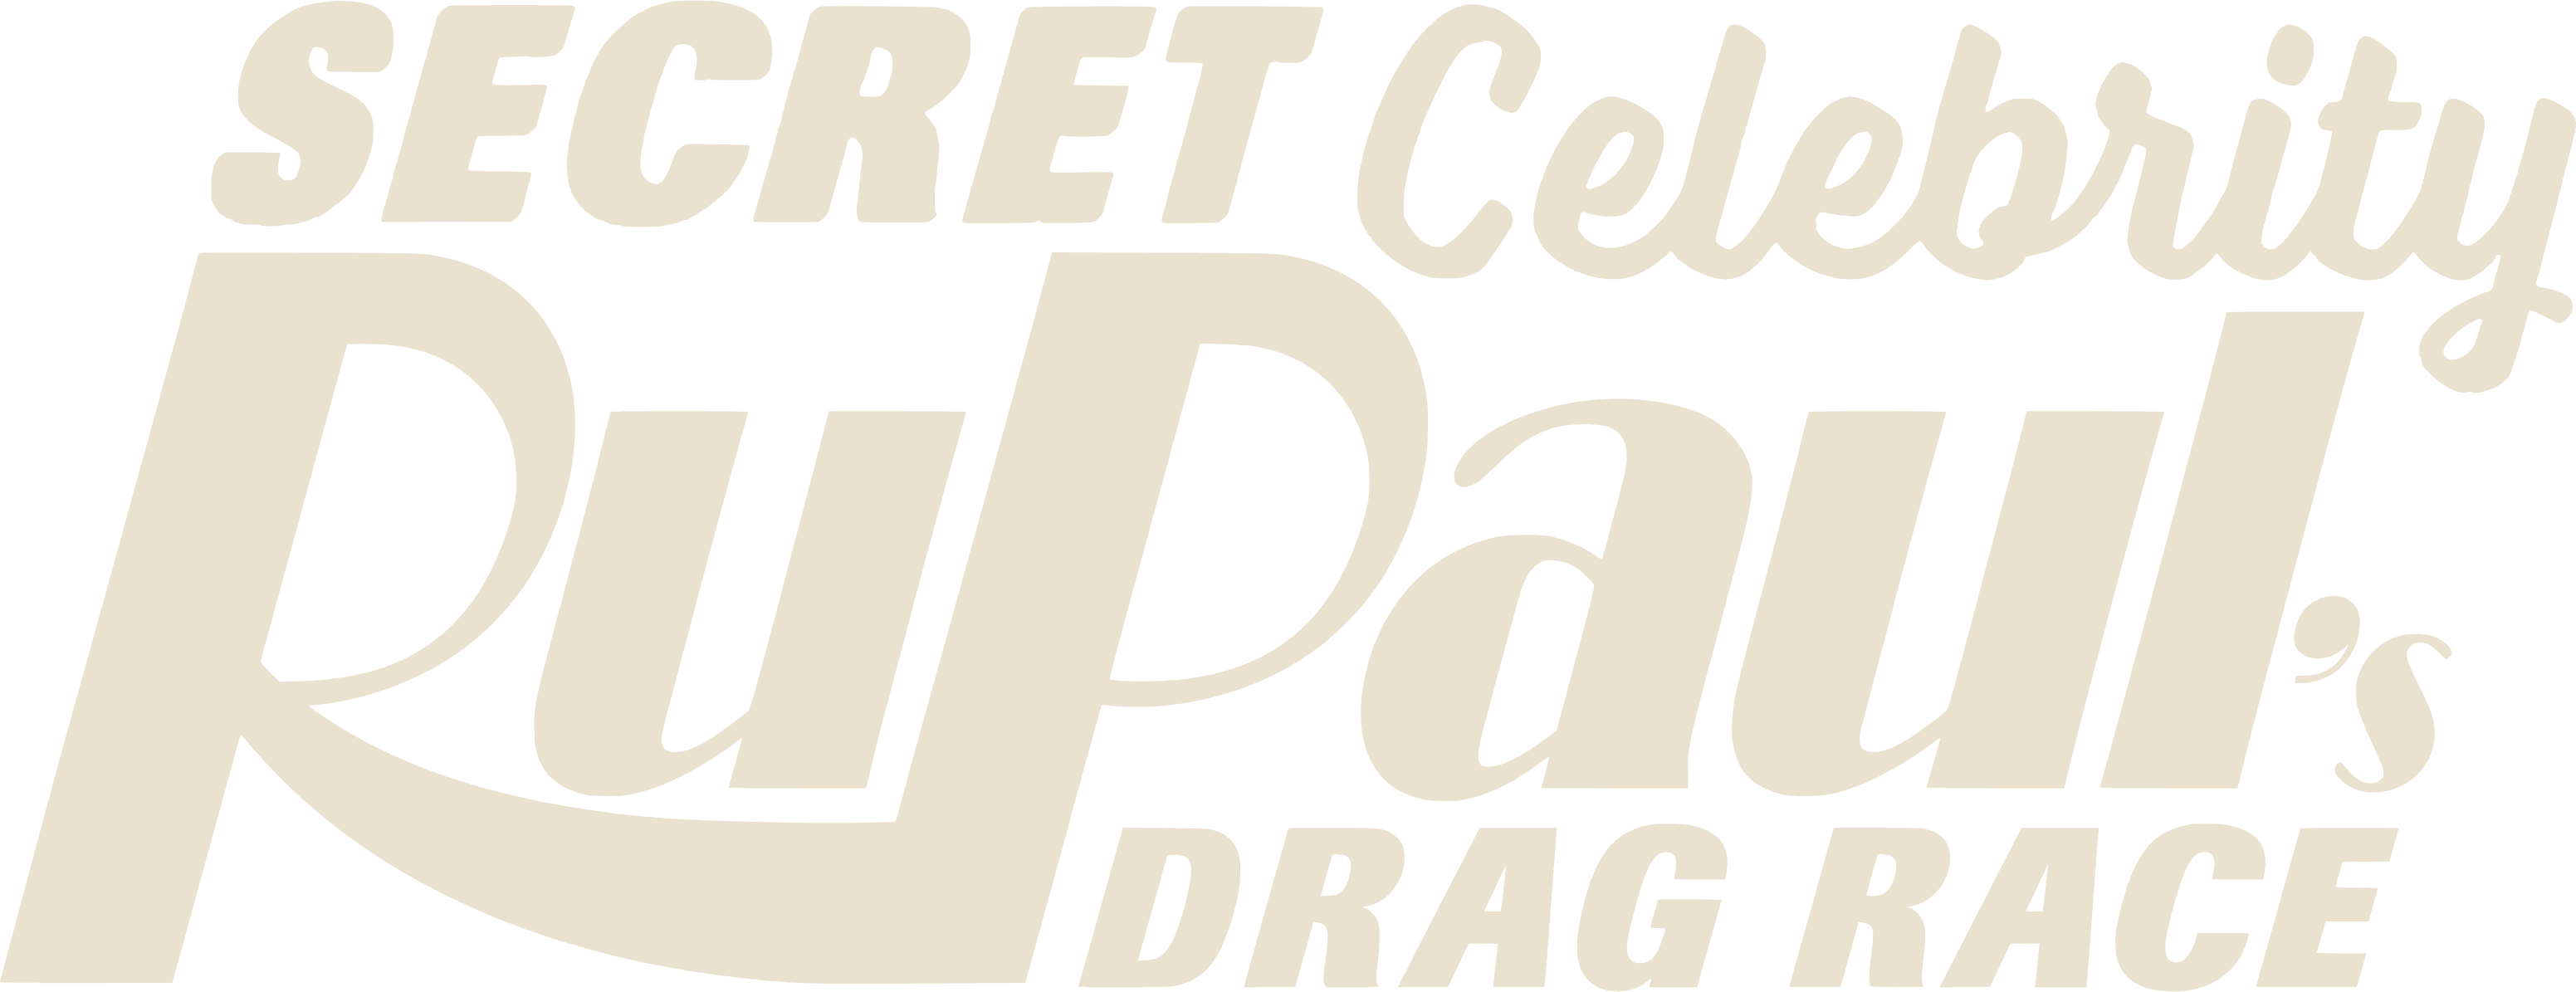 Secret Celebrity RuPaul's Drag Race logo